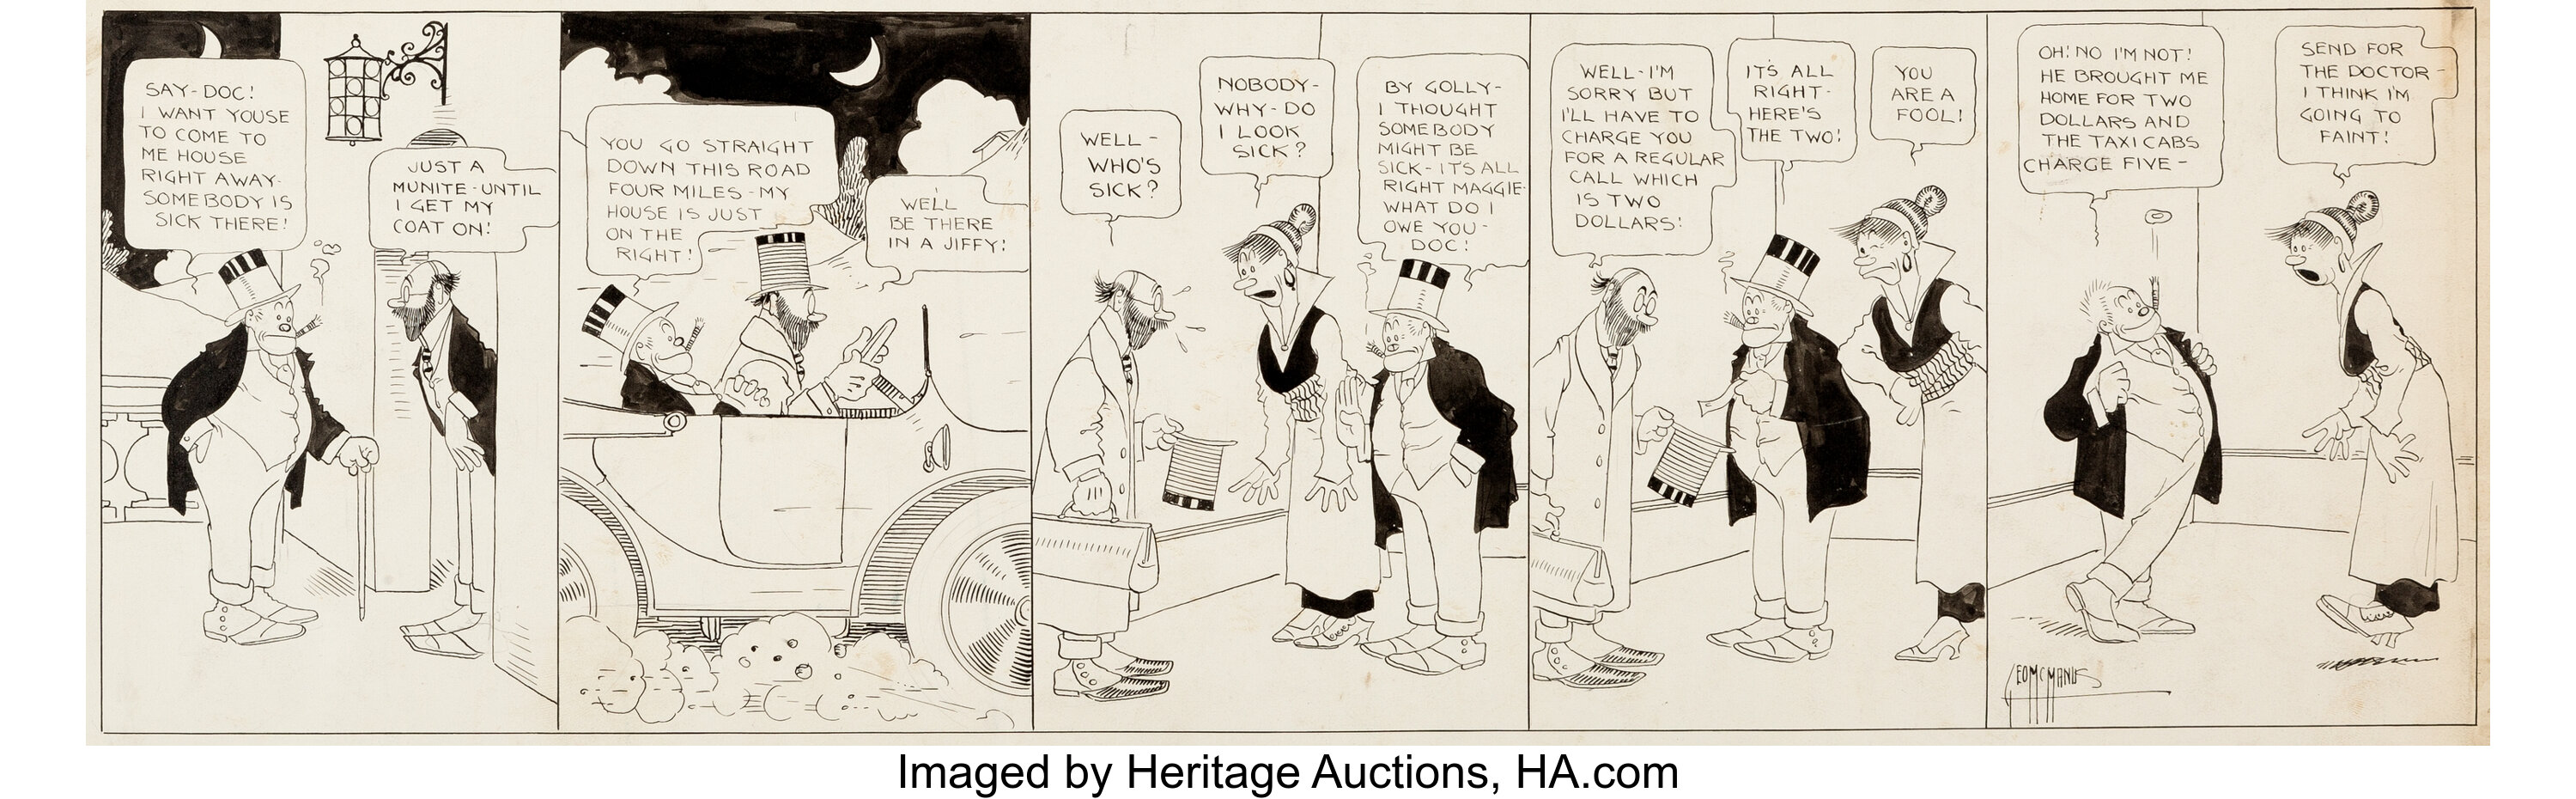 George Mcmanus Bringing Up Father Daily Comic Strip Original Art Lot 15144 Heritage Auctions